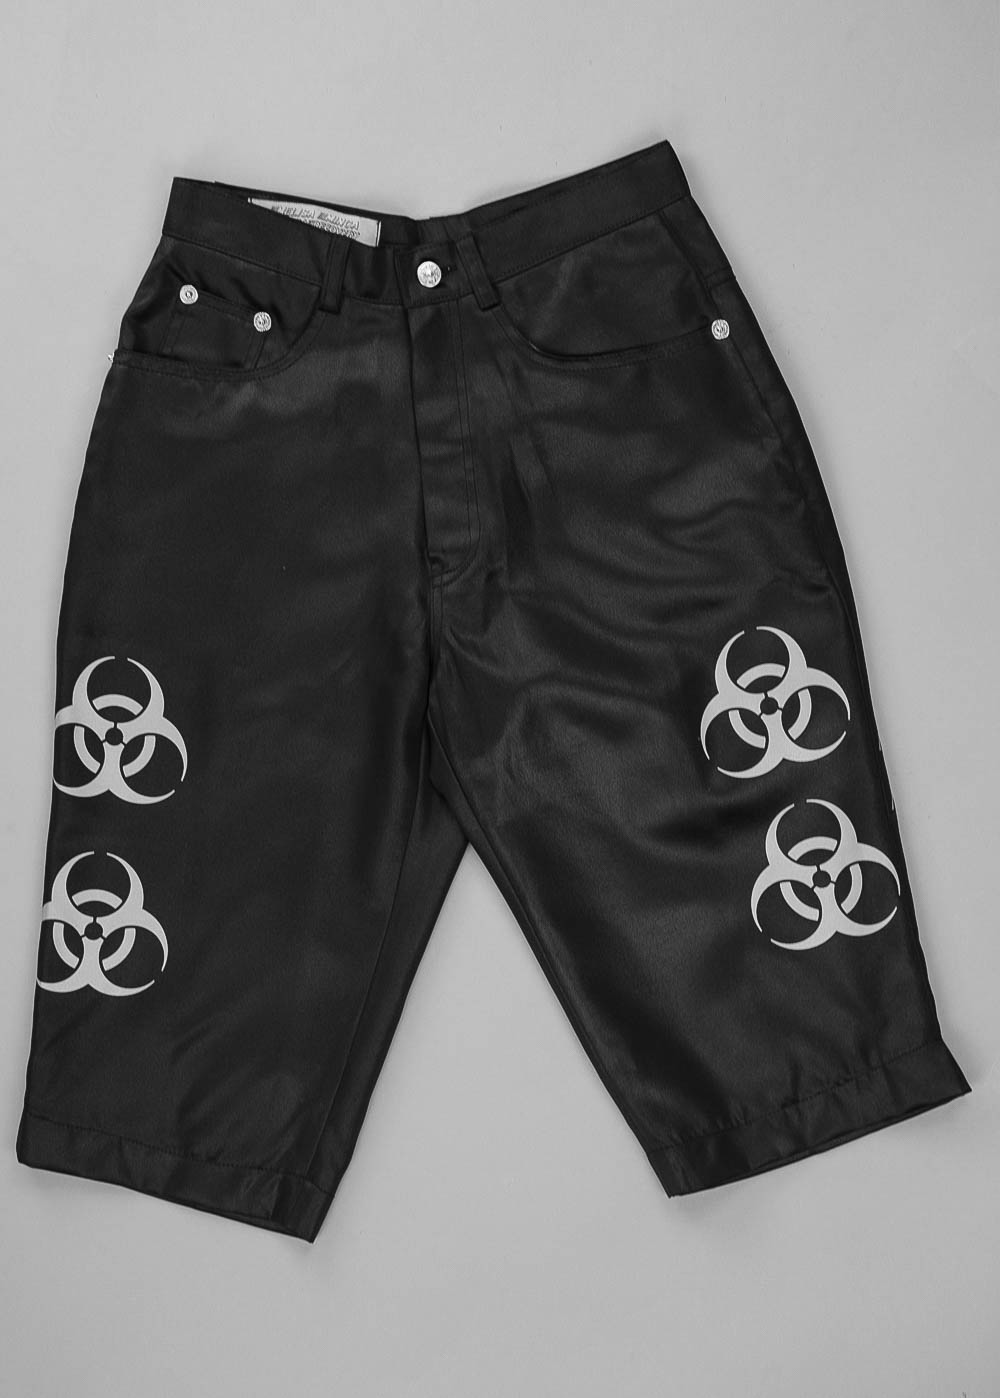 Toxic Shorts 4